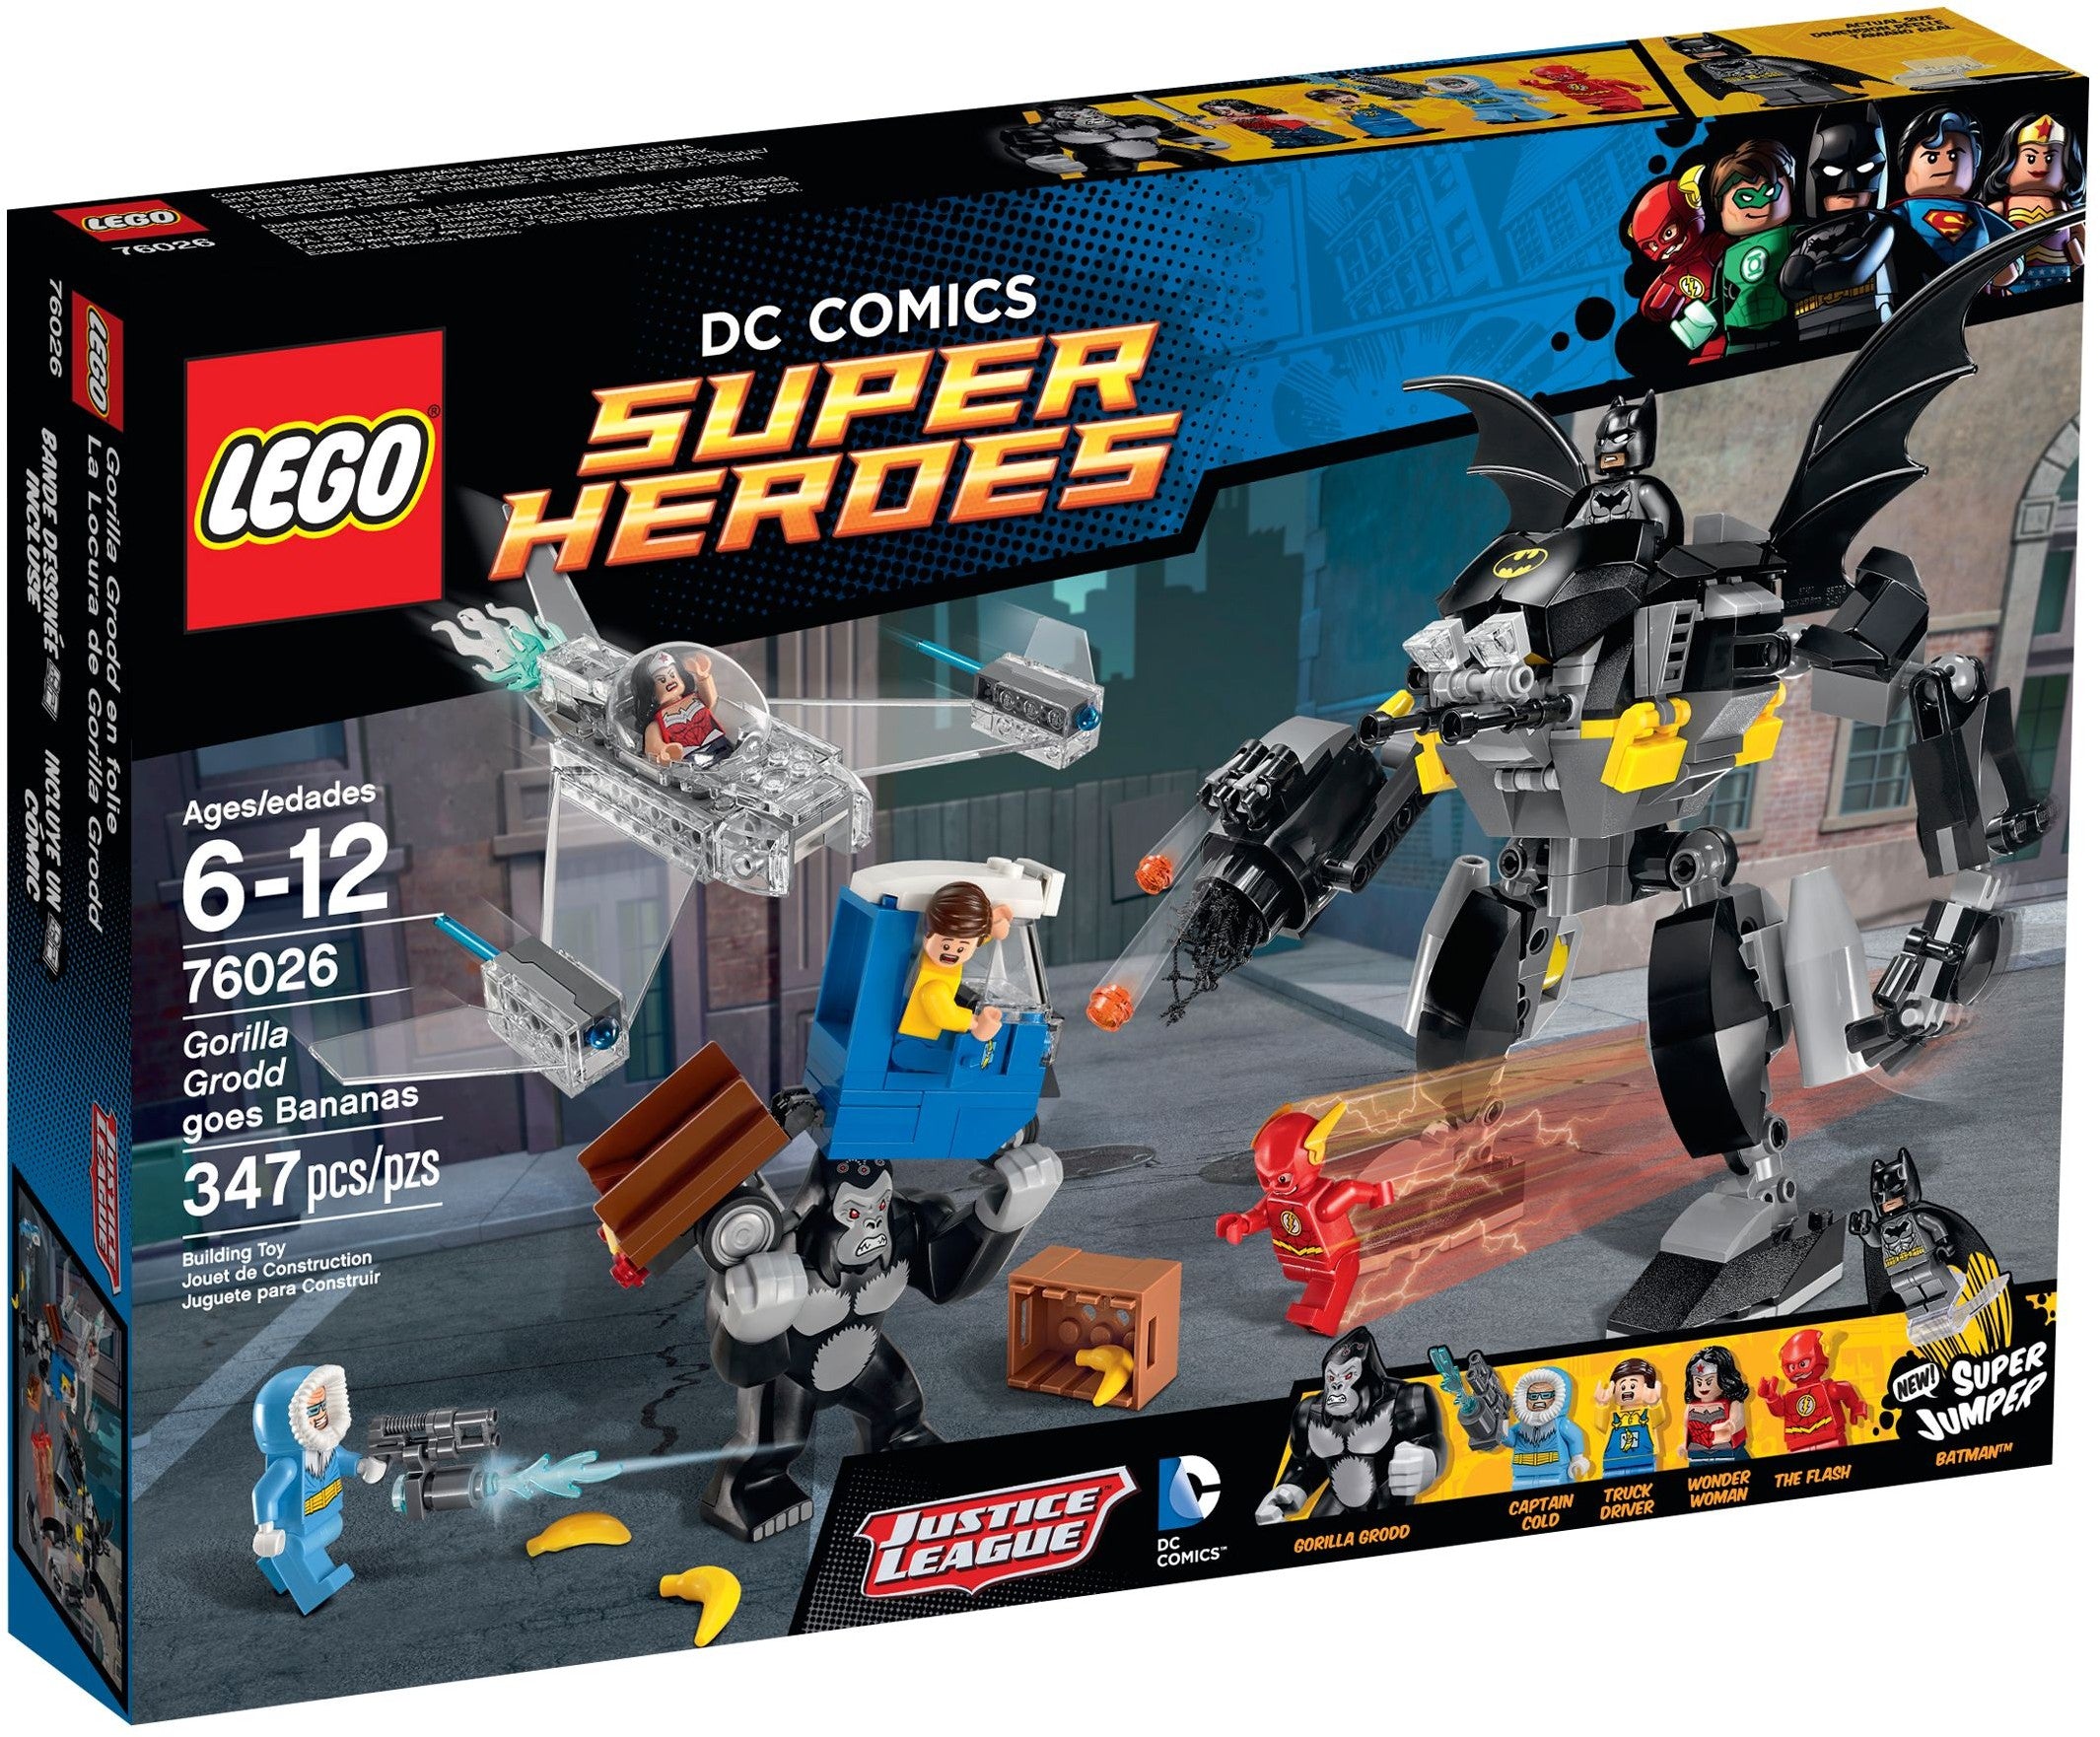 Lego Super Heroes 76026 - Gorilla Grodd Goes Bananas